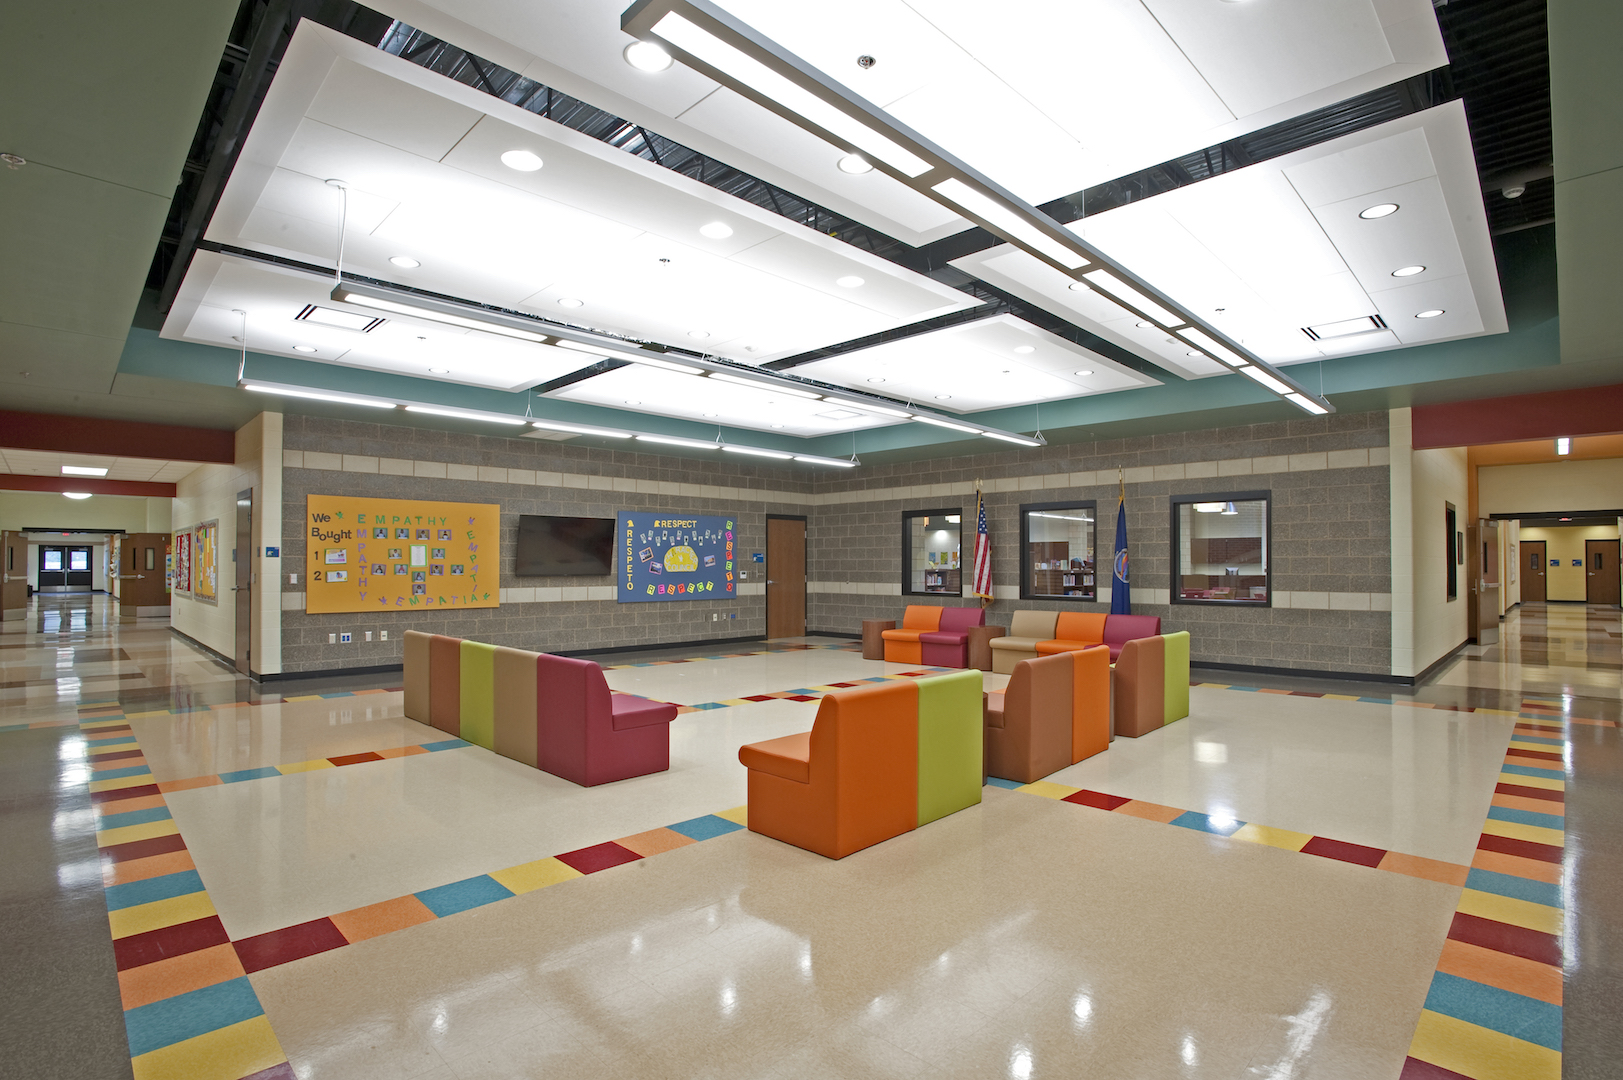 USD 500 Kansas City Elementary School - McKinley Elementary School